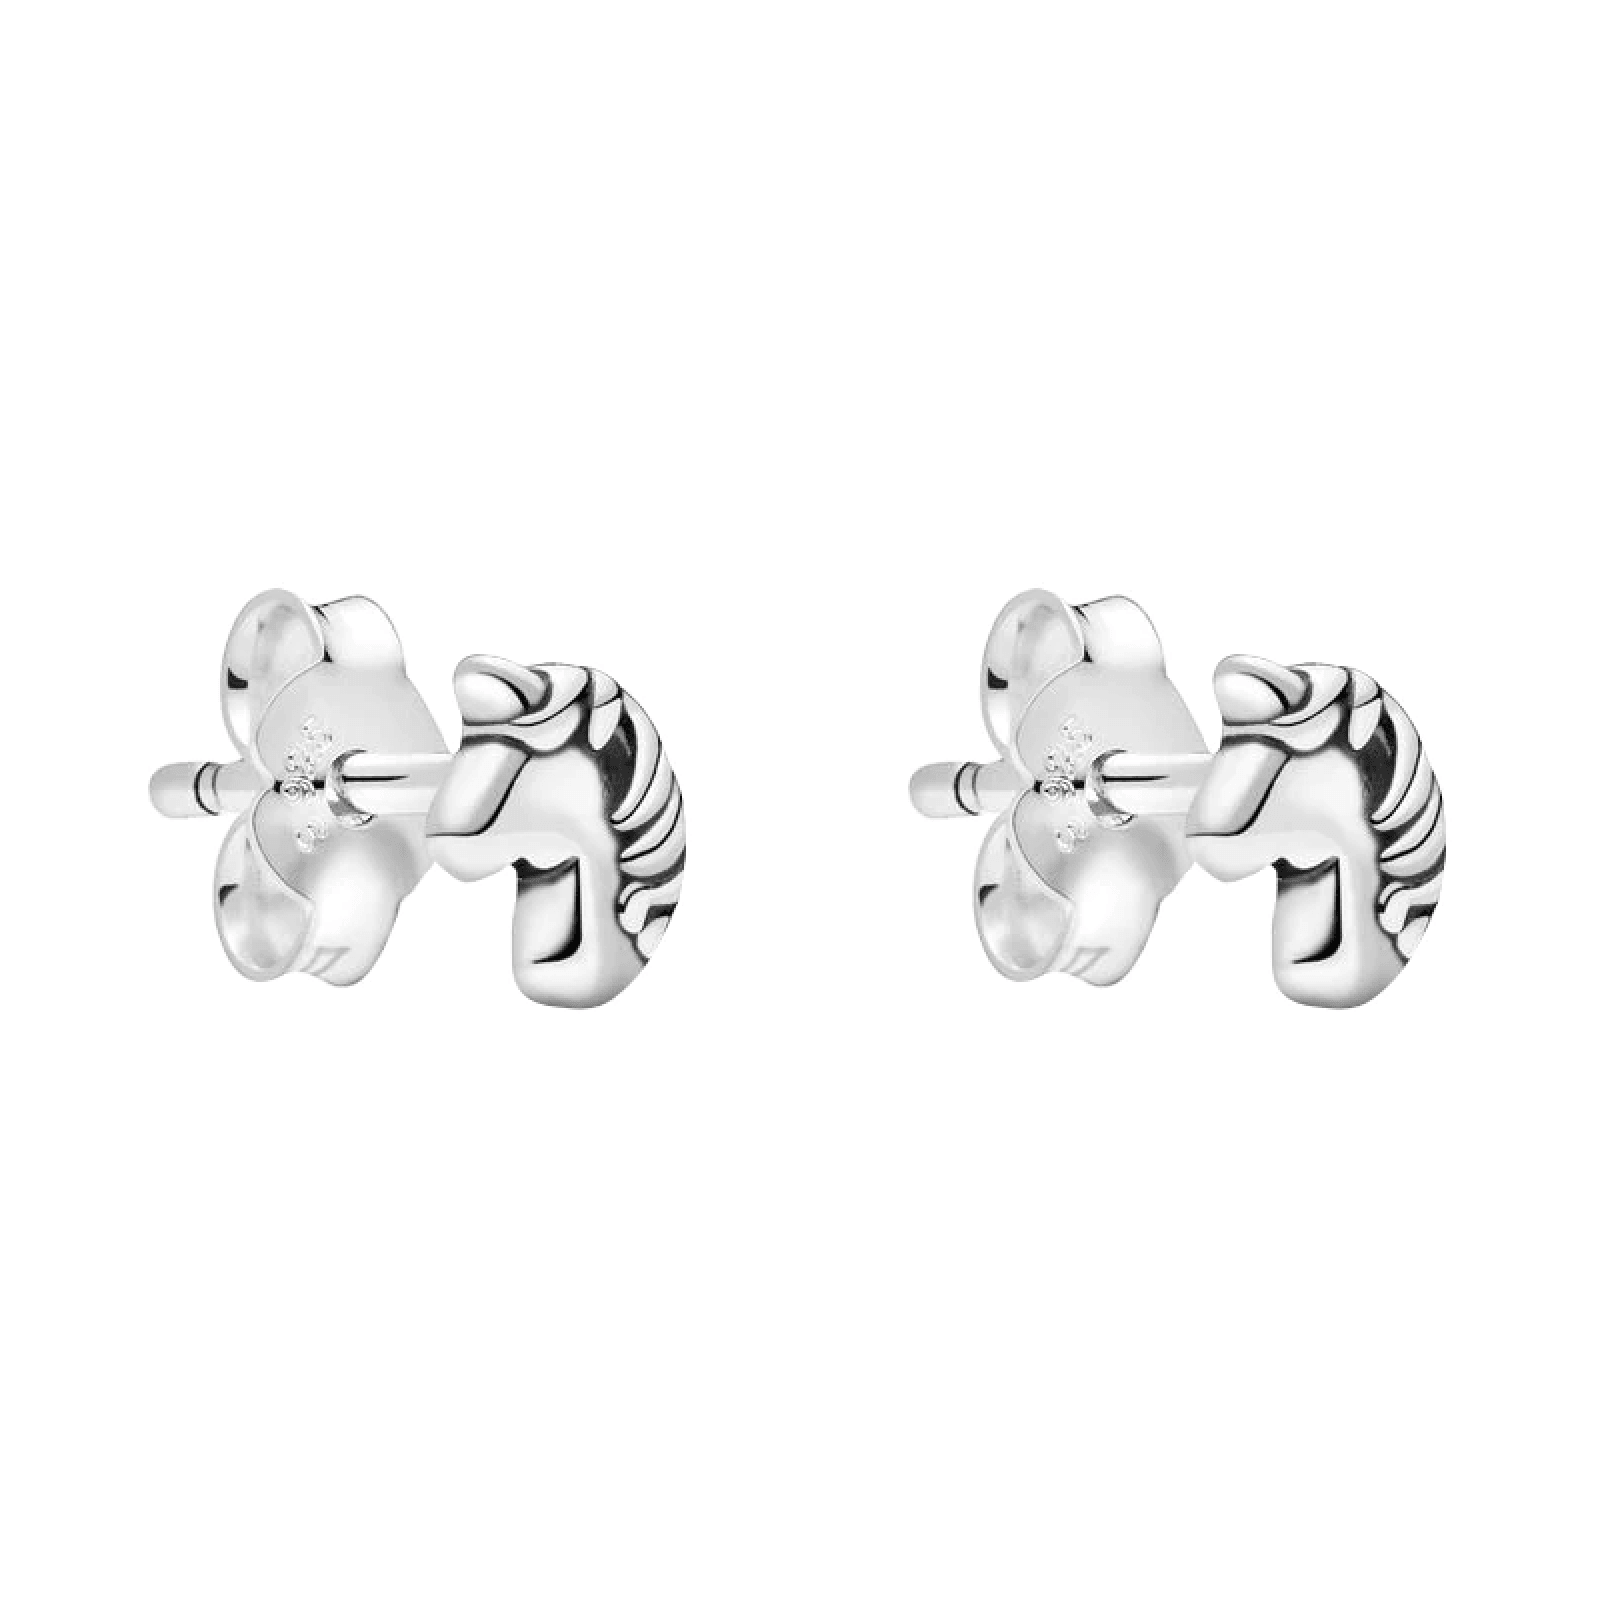 Unicorn Emoji Earrings - Unicorn